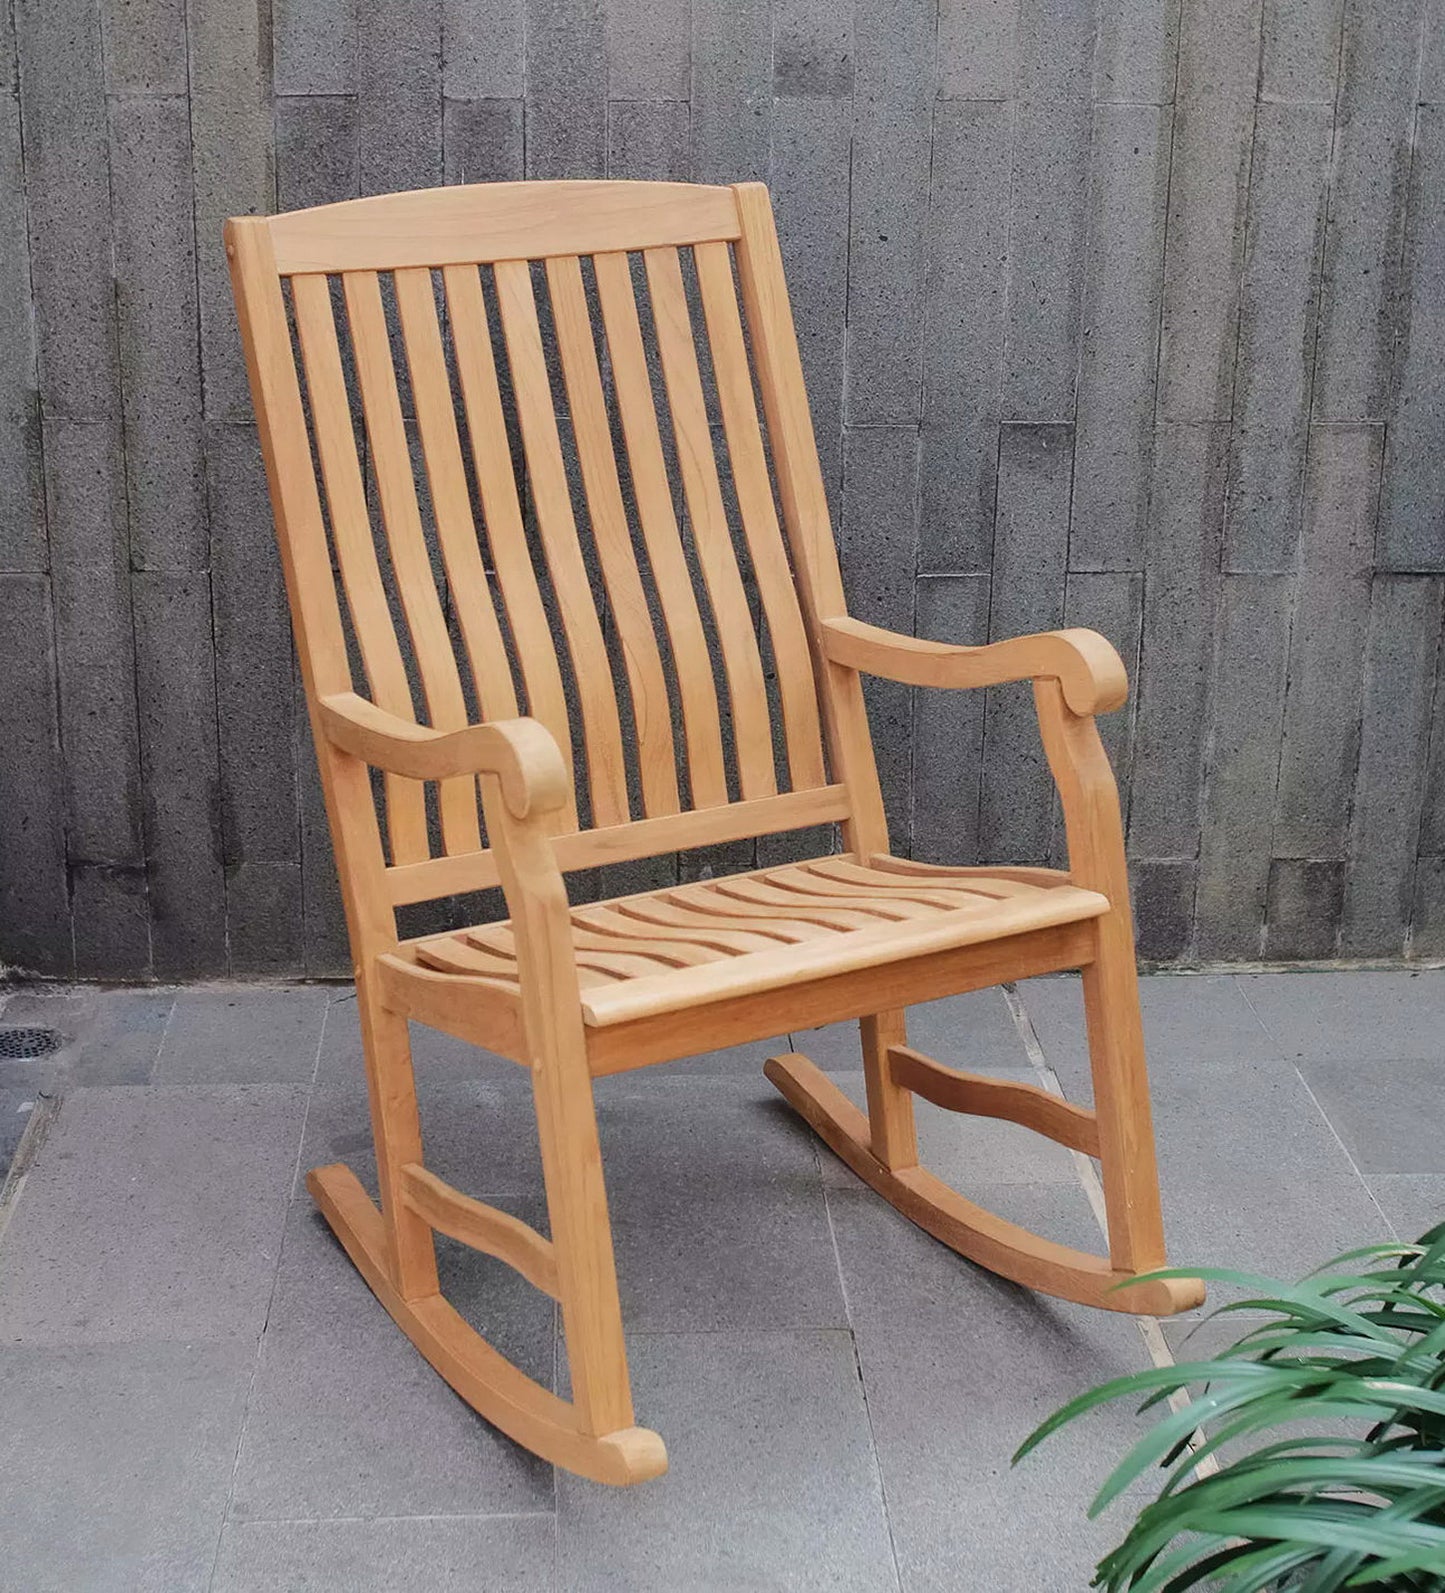 Solid Teak Wood Rocking Chair Large Rocker Outdoor Porch Furniture